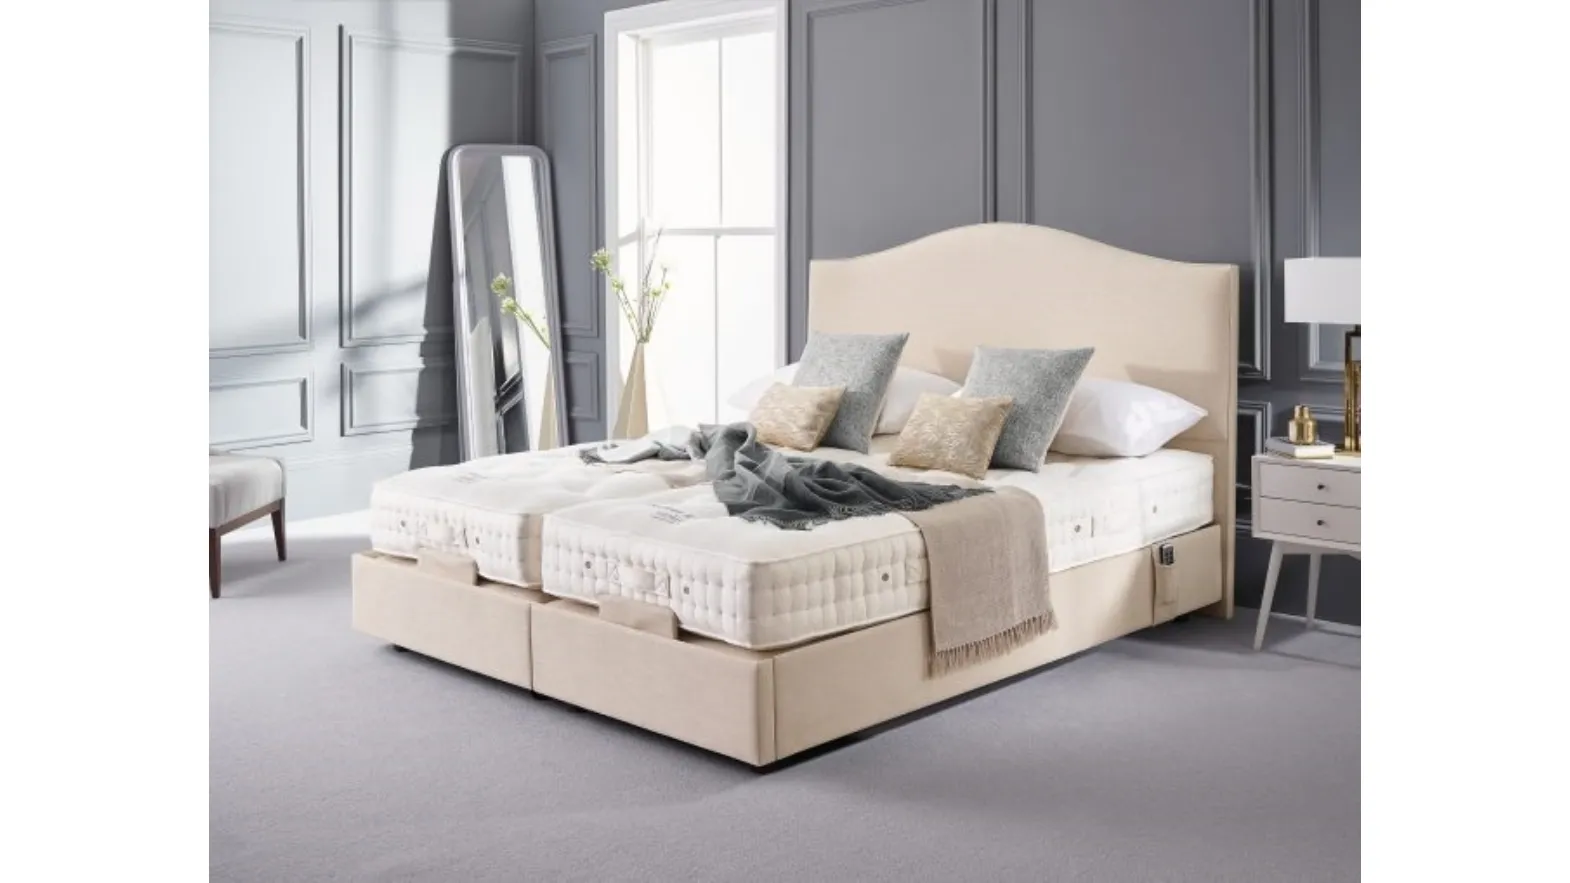 Topaz II luxury mattress from Vispring